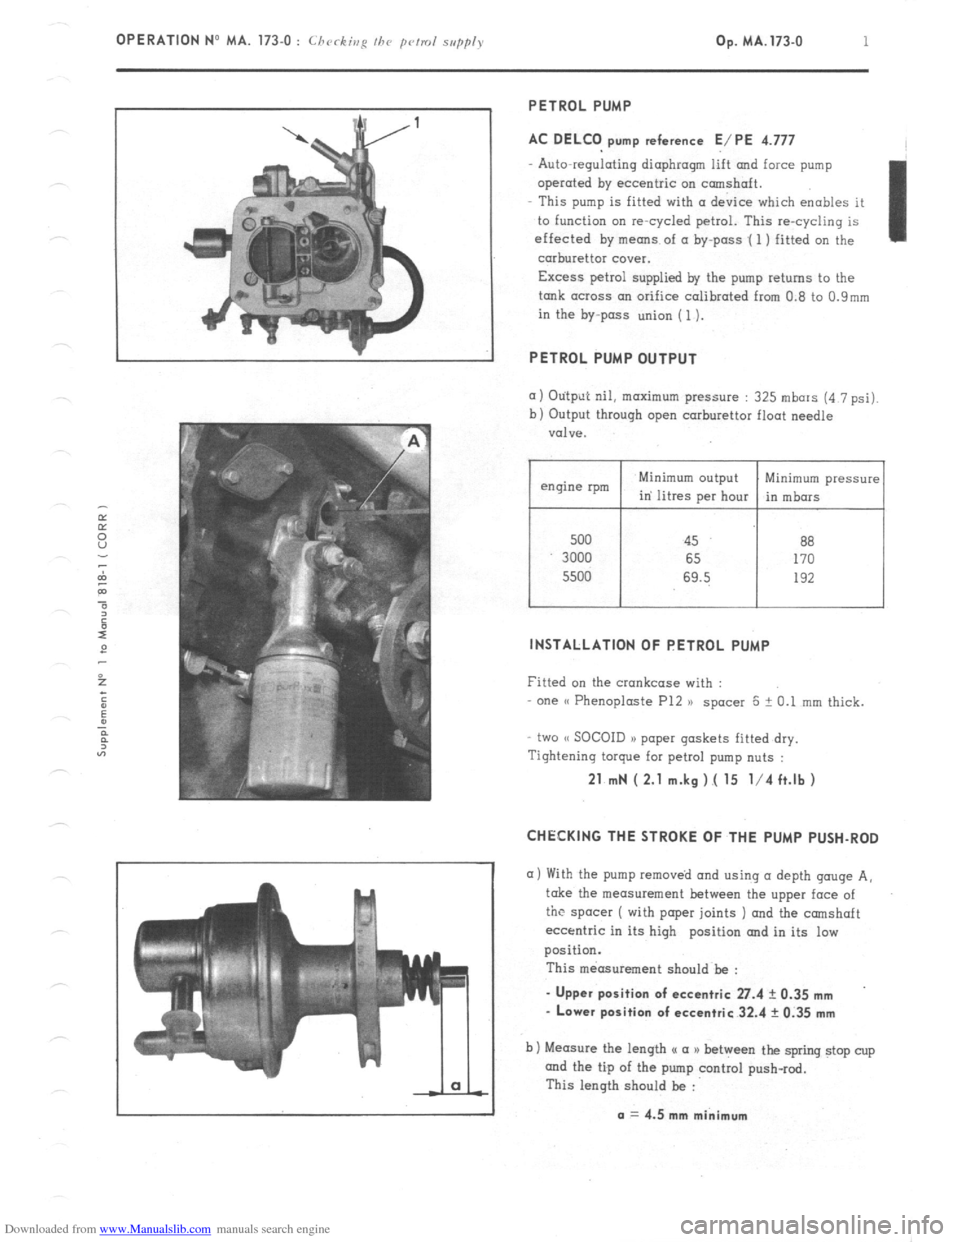 Citroen CX 1982 1.G Workshop Manual Downloaded from www.Manualslib.com manuals search engine OPERATION No MA. 173-O : Chrrkivp fhr prmd s,,pp/> Op. MA. 173.0 1 
PETROL PUMP 
AC DELCO pump reference E/PE 4.777 
Auto-regulating diaphragm 